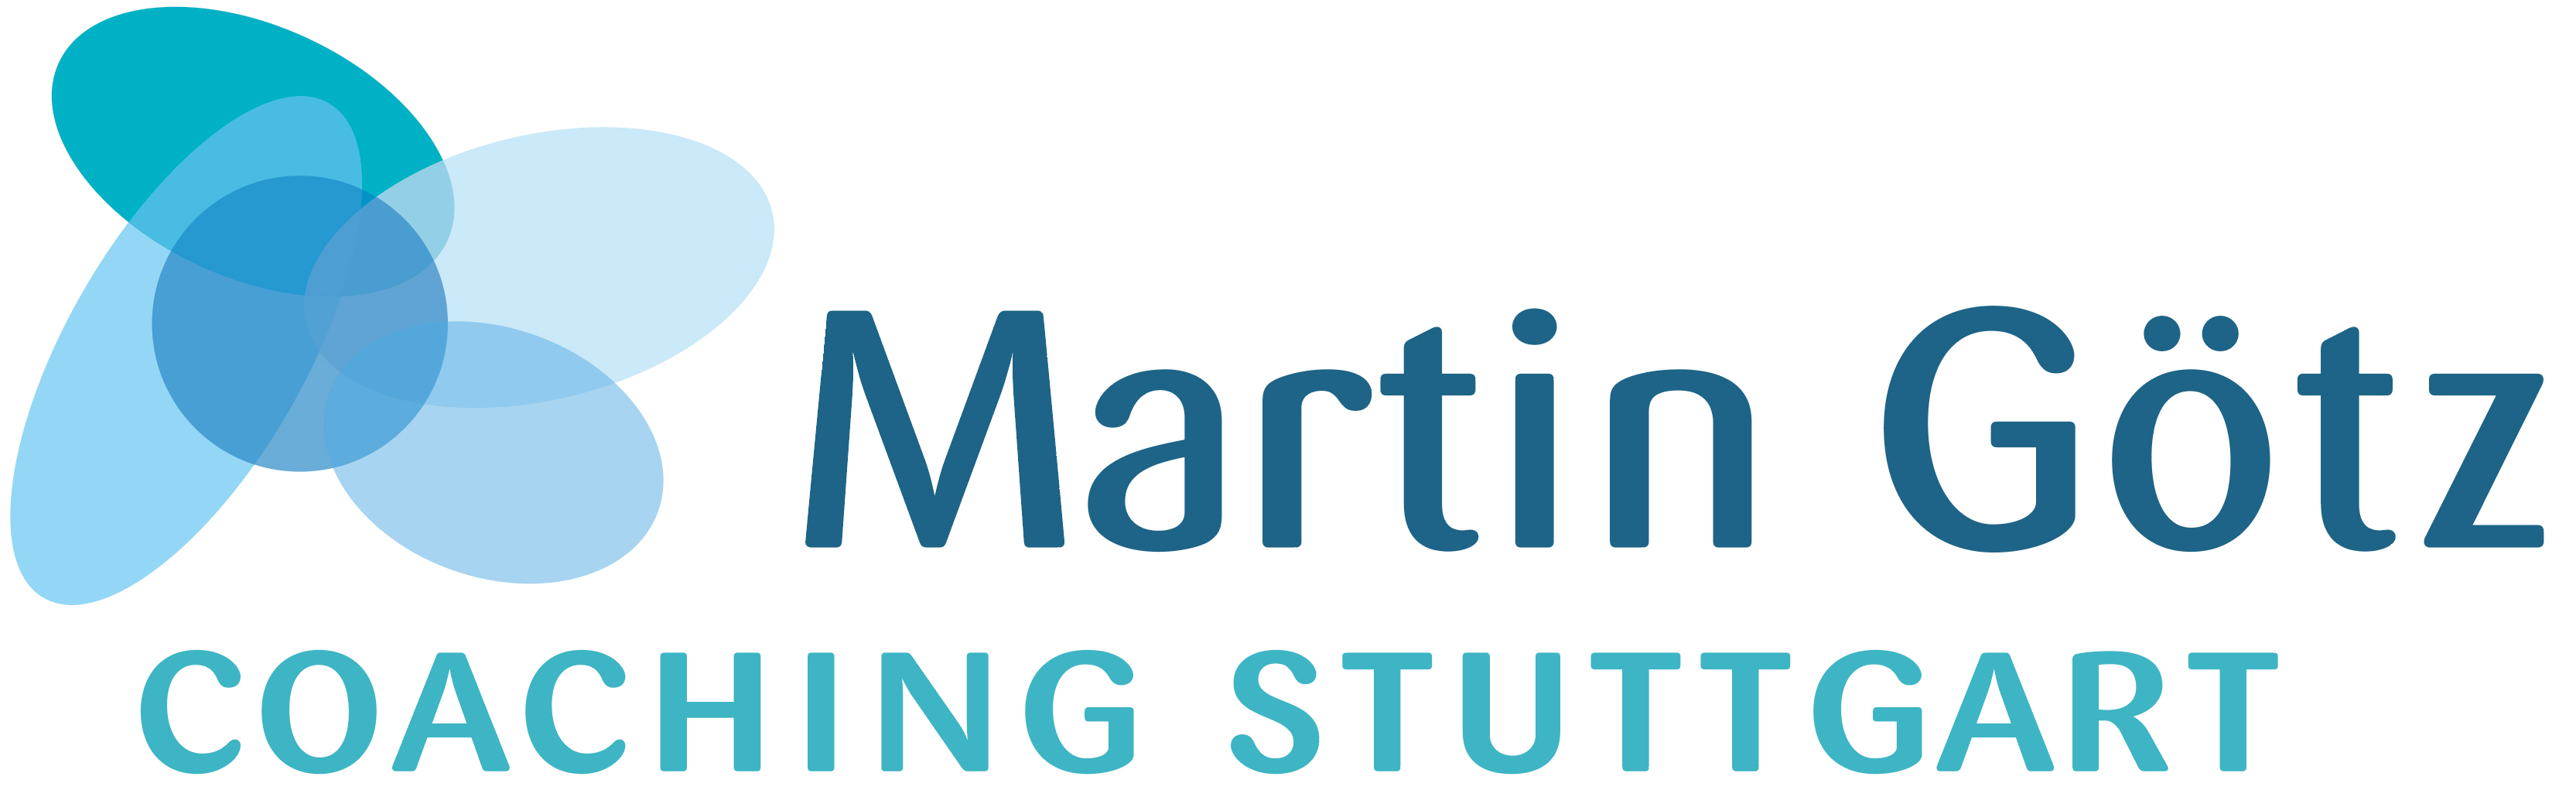 Martin Götz COACHING STUTTGART | martin-goetz.coach | Logo | 